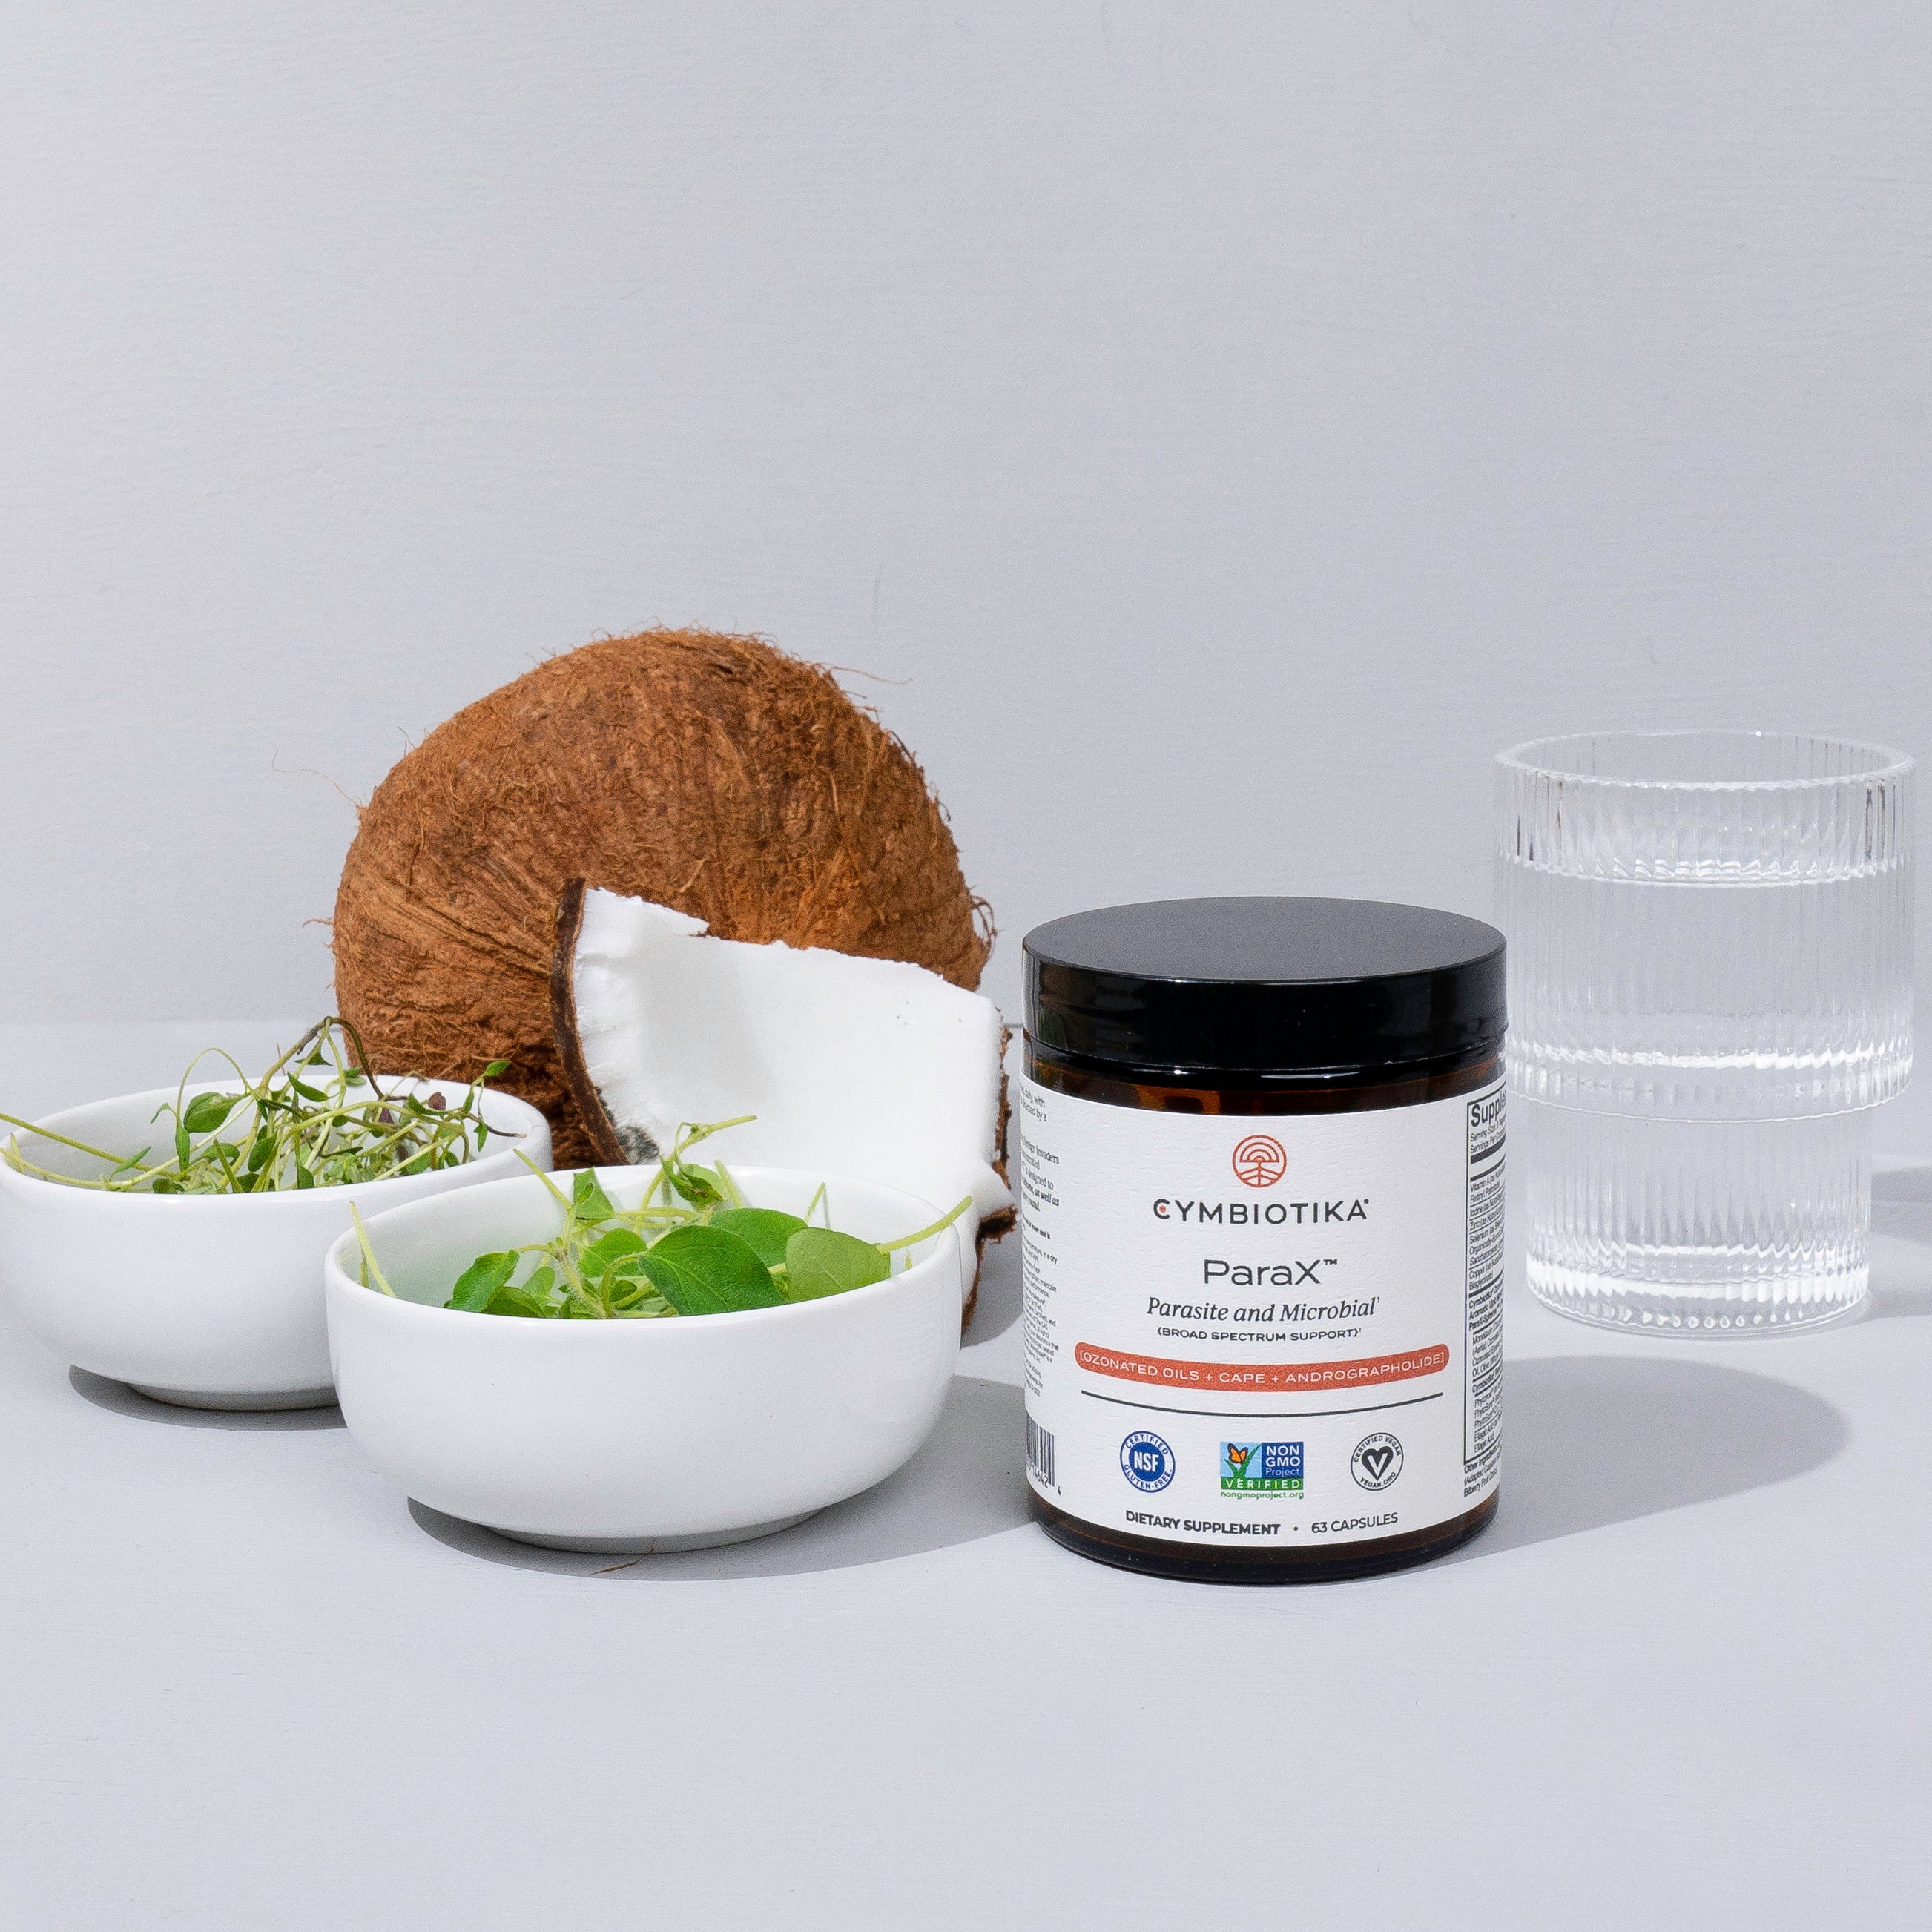 ParaX™ Jar Next to Ingredients 